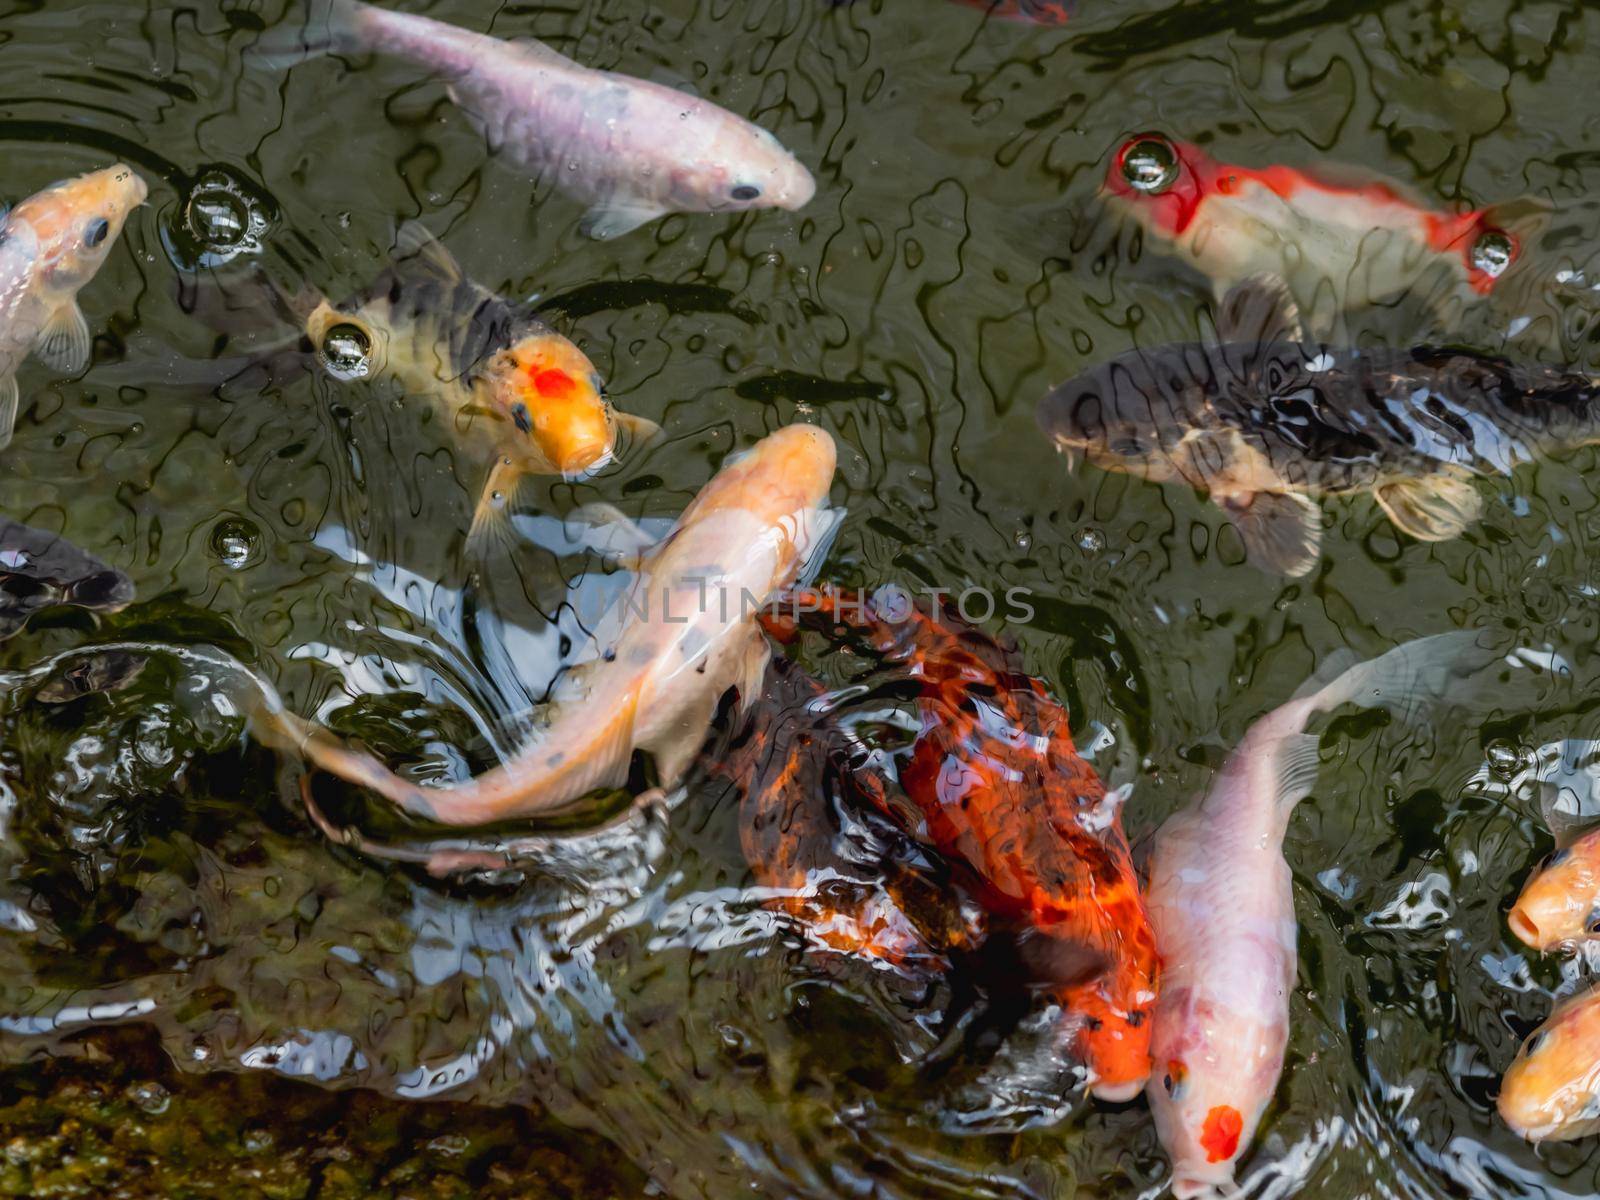 Amur carp or Cyprinus rubrofuscus, usually called Koi or nishikigoi. Colorful decorative fishes in water. by aksenovko